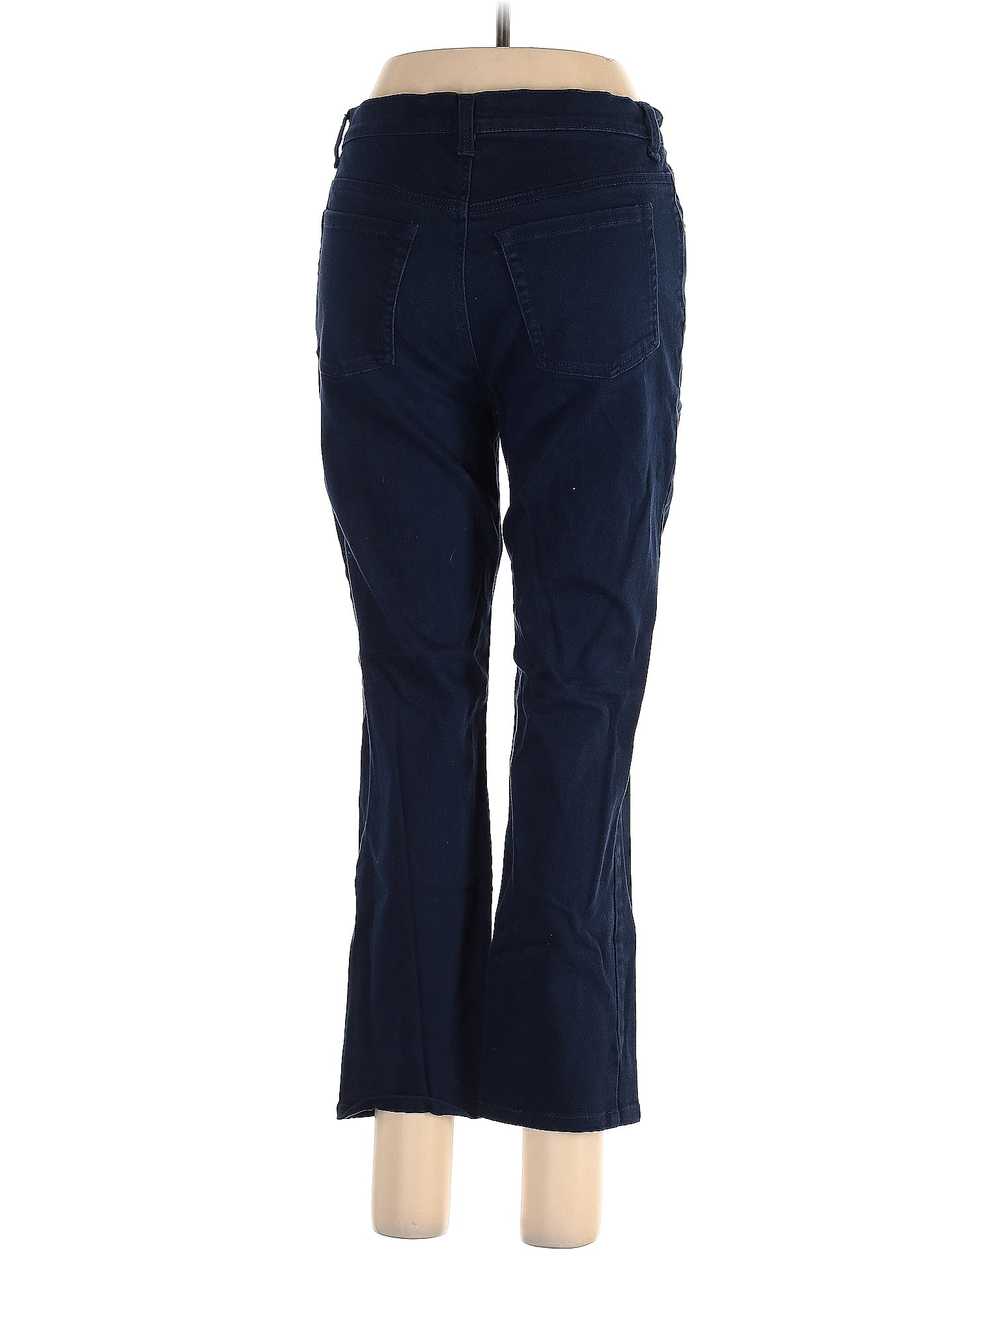 Gloria Vanderbilt Women Blue Jeans 10 Petites - image 2